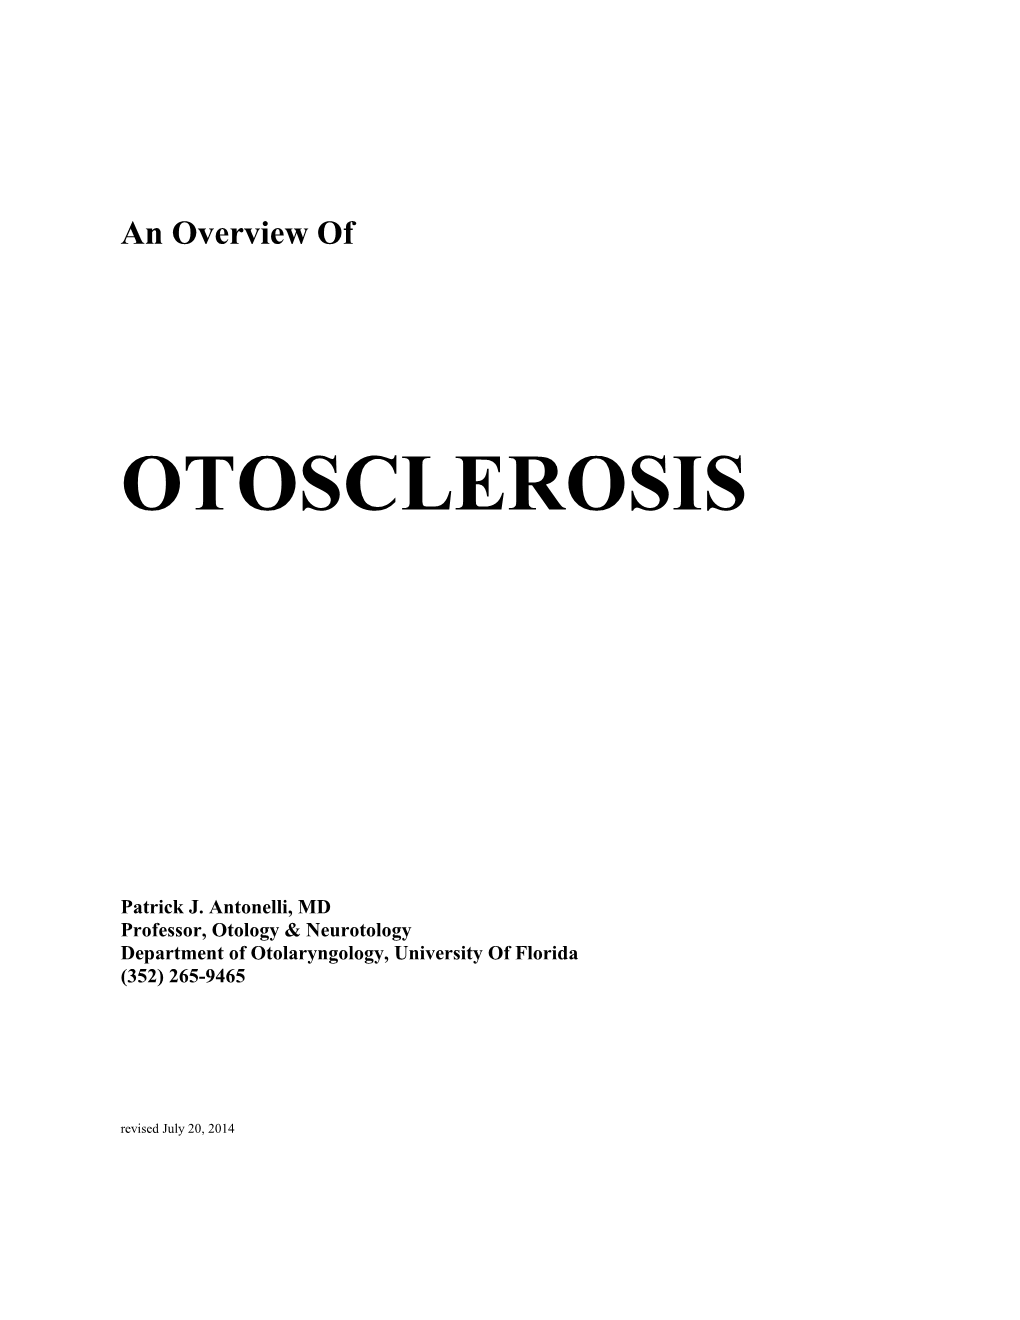 Otosclerosis